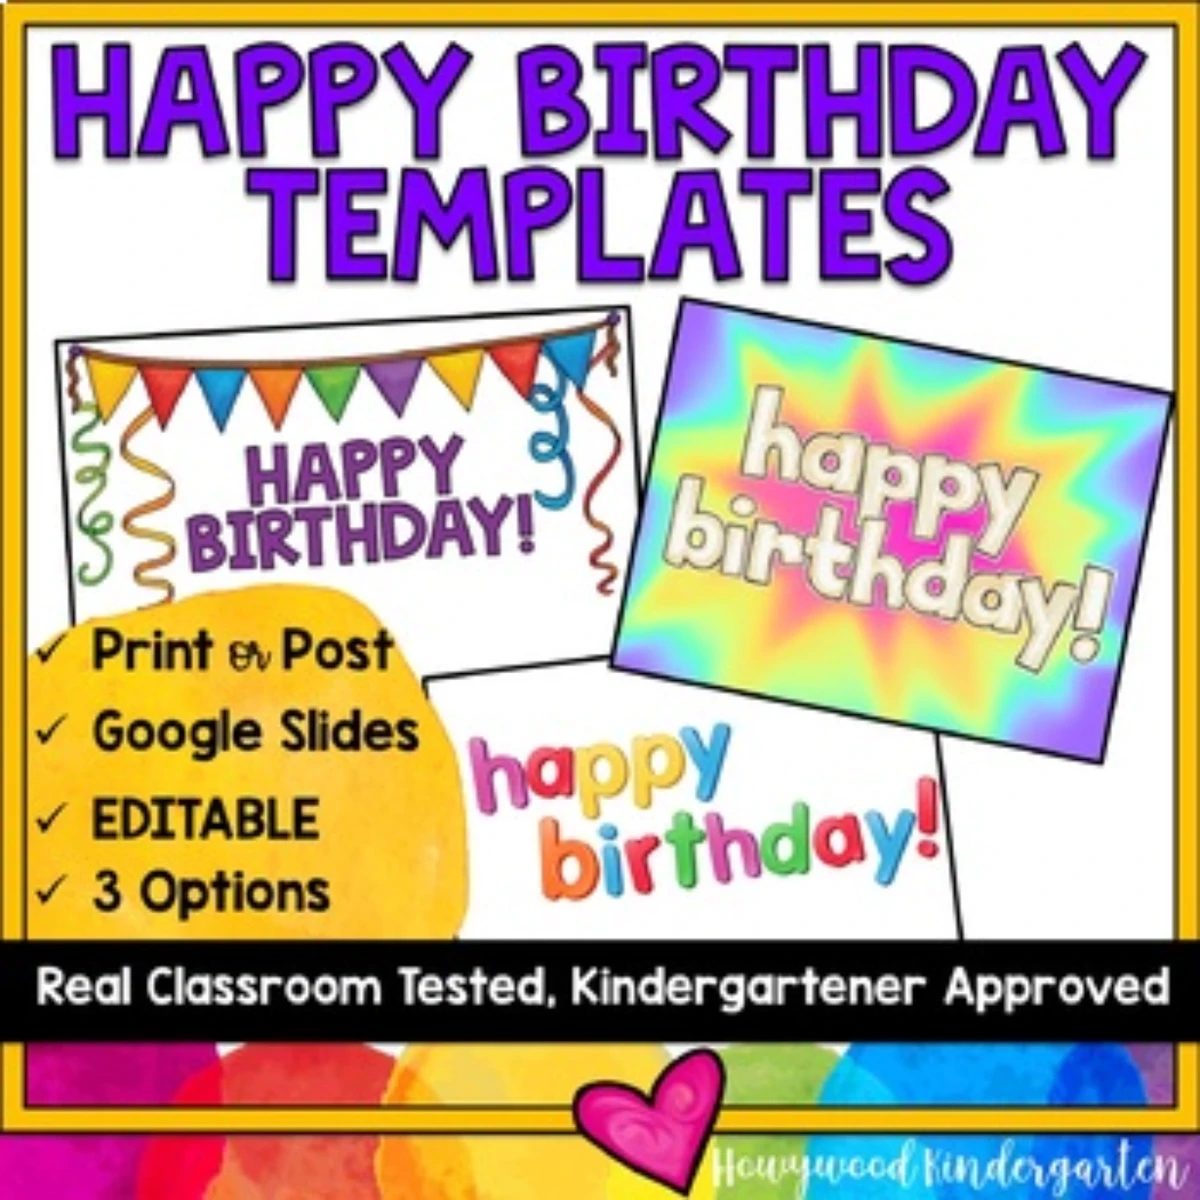 Happy Birthday Templates in Google Slides